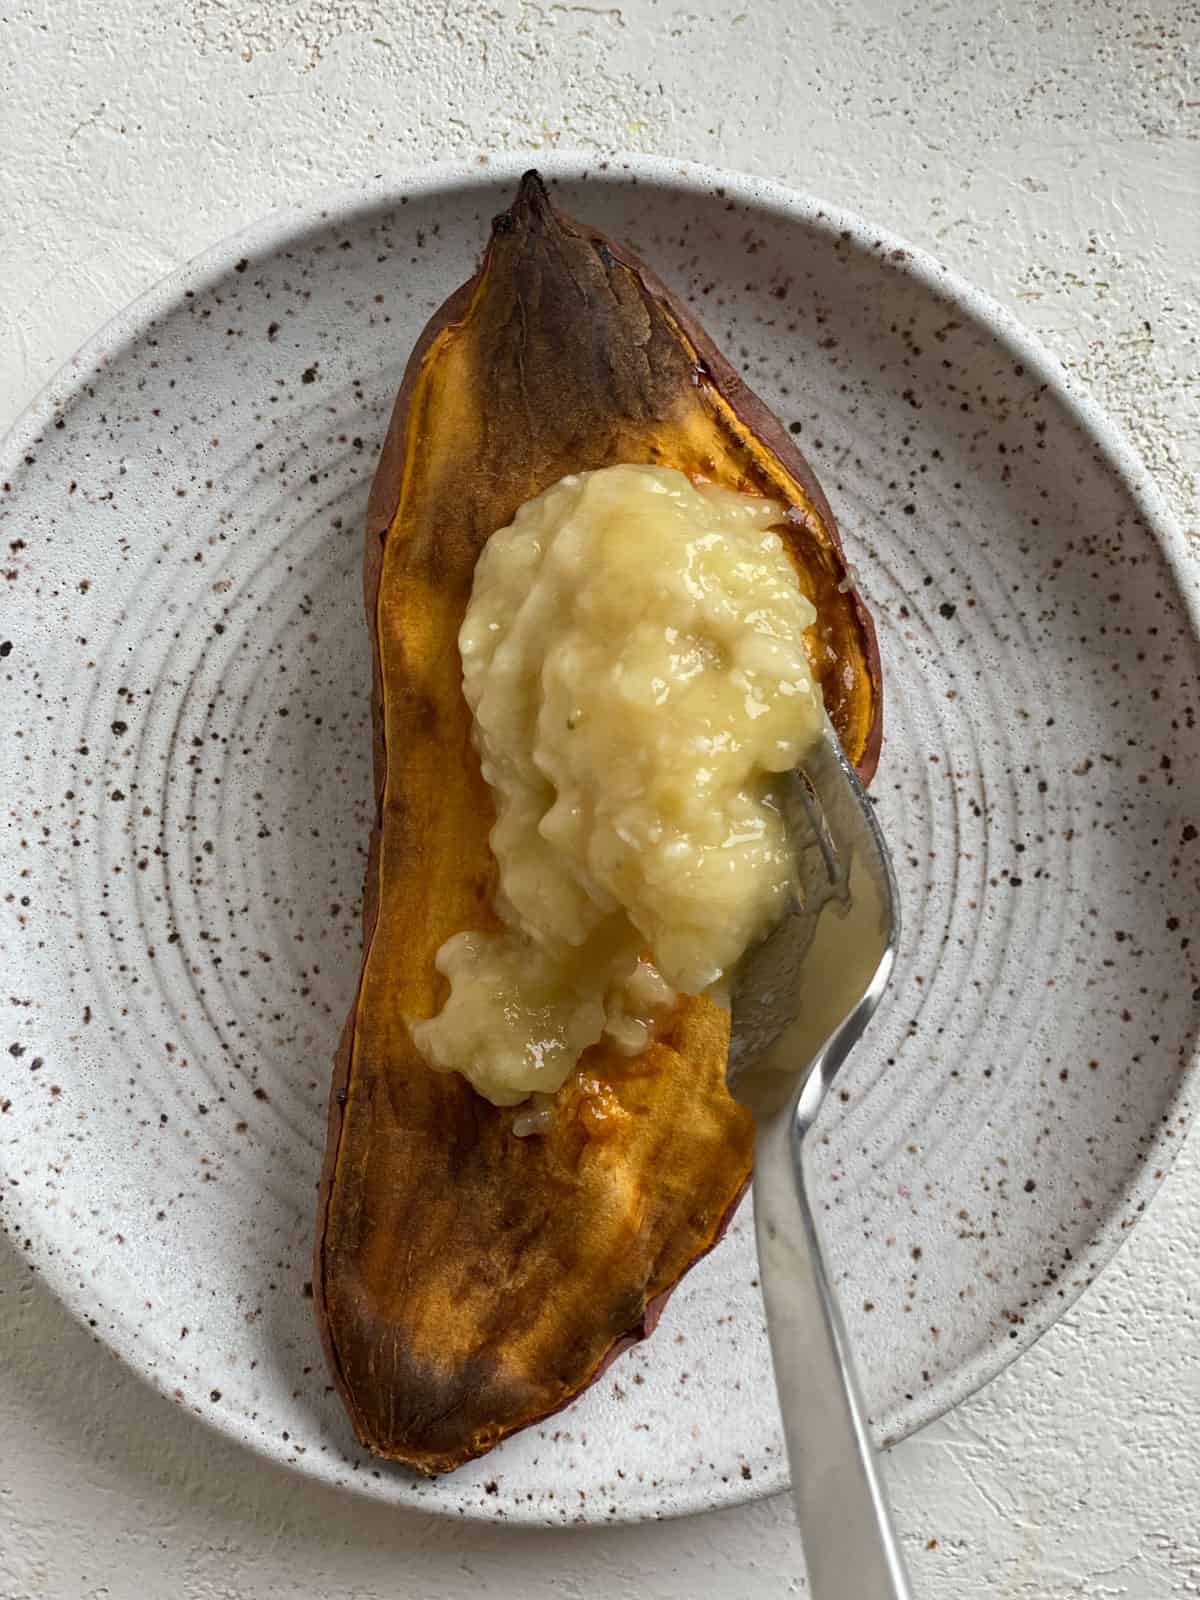 process shot of adding banana to sweet potato on plate